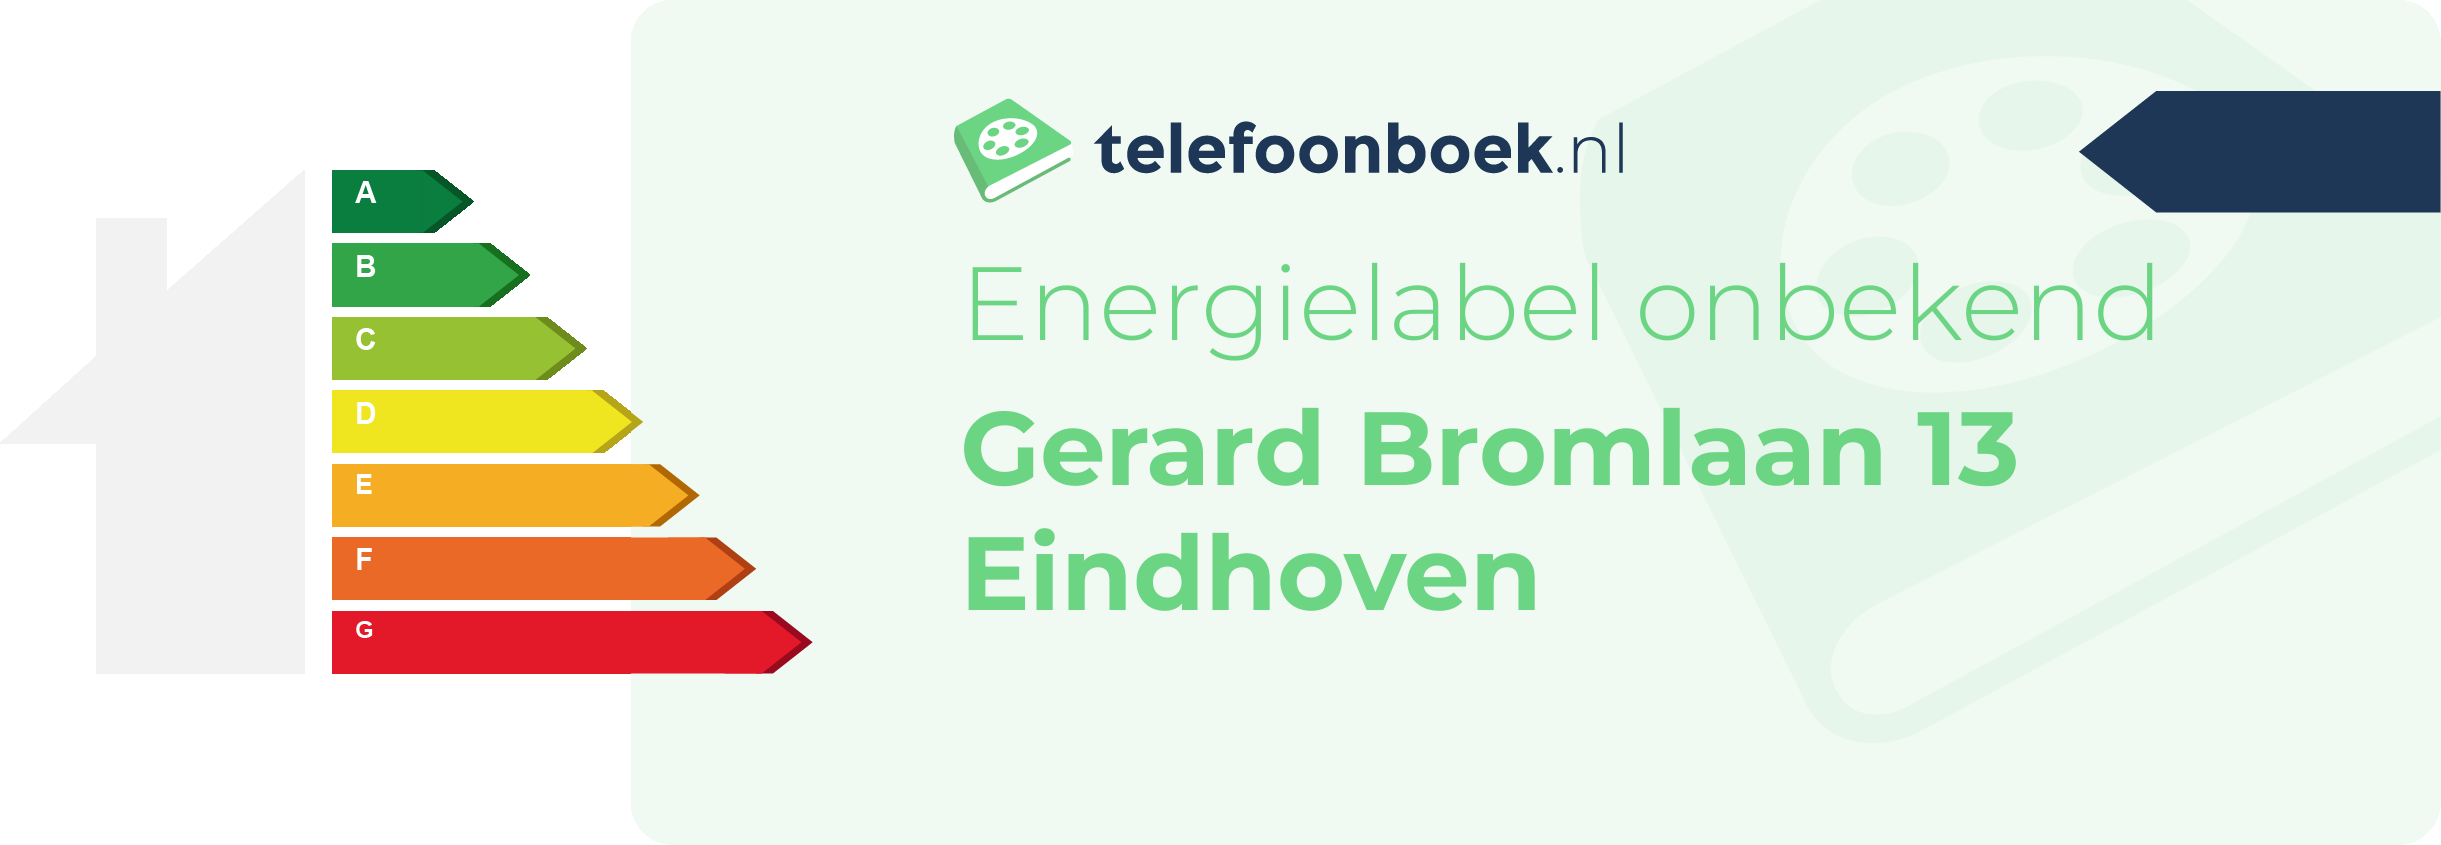 Energielabel Gerard Bromlaan 13 Eindhoven